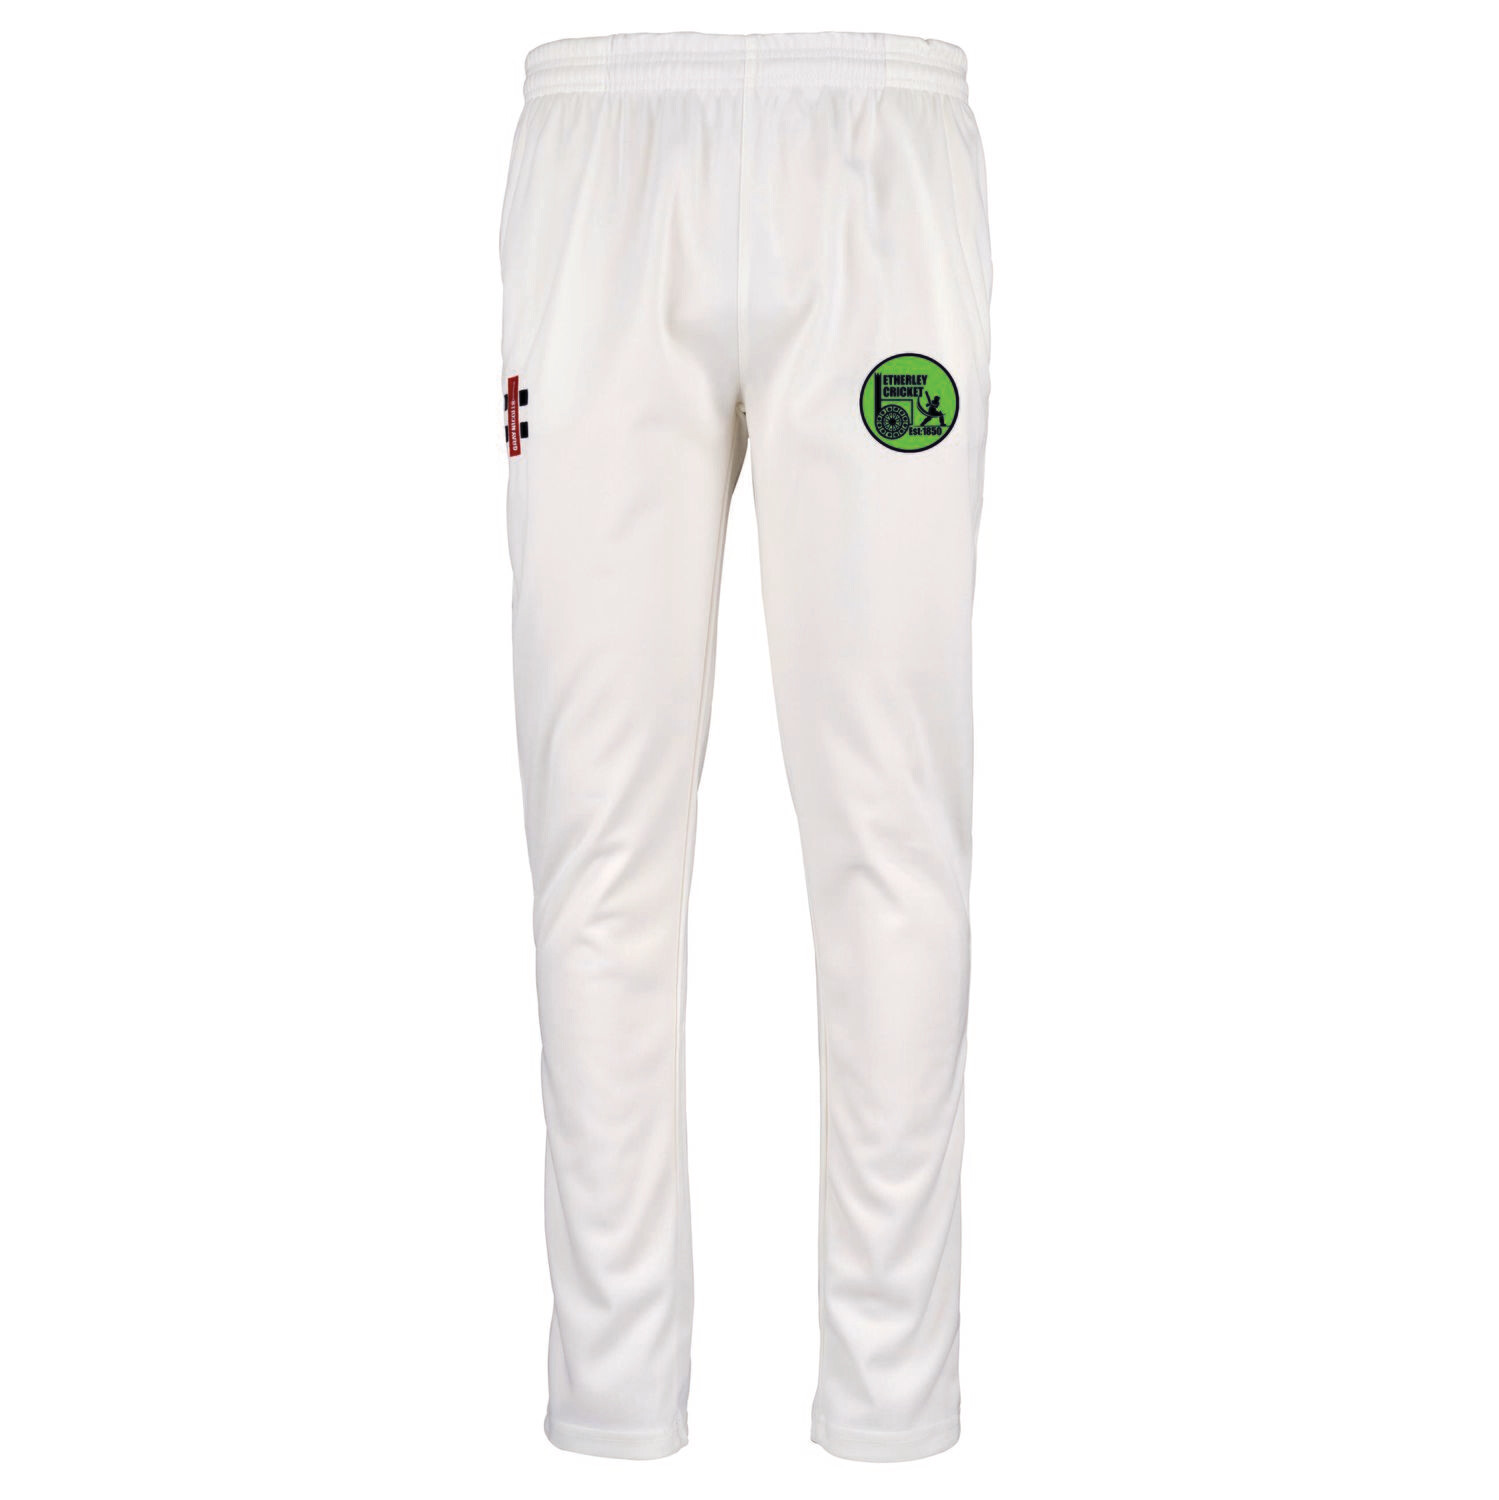 Etherley Matrix V2 SLIM FIT Cricket Trousers